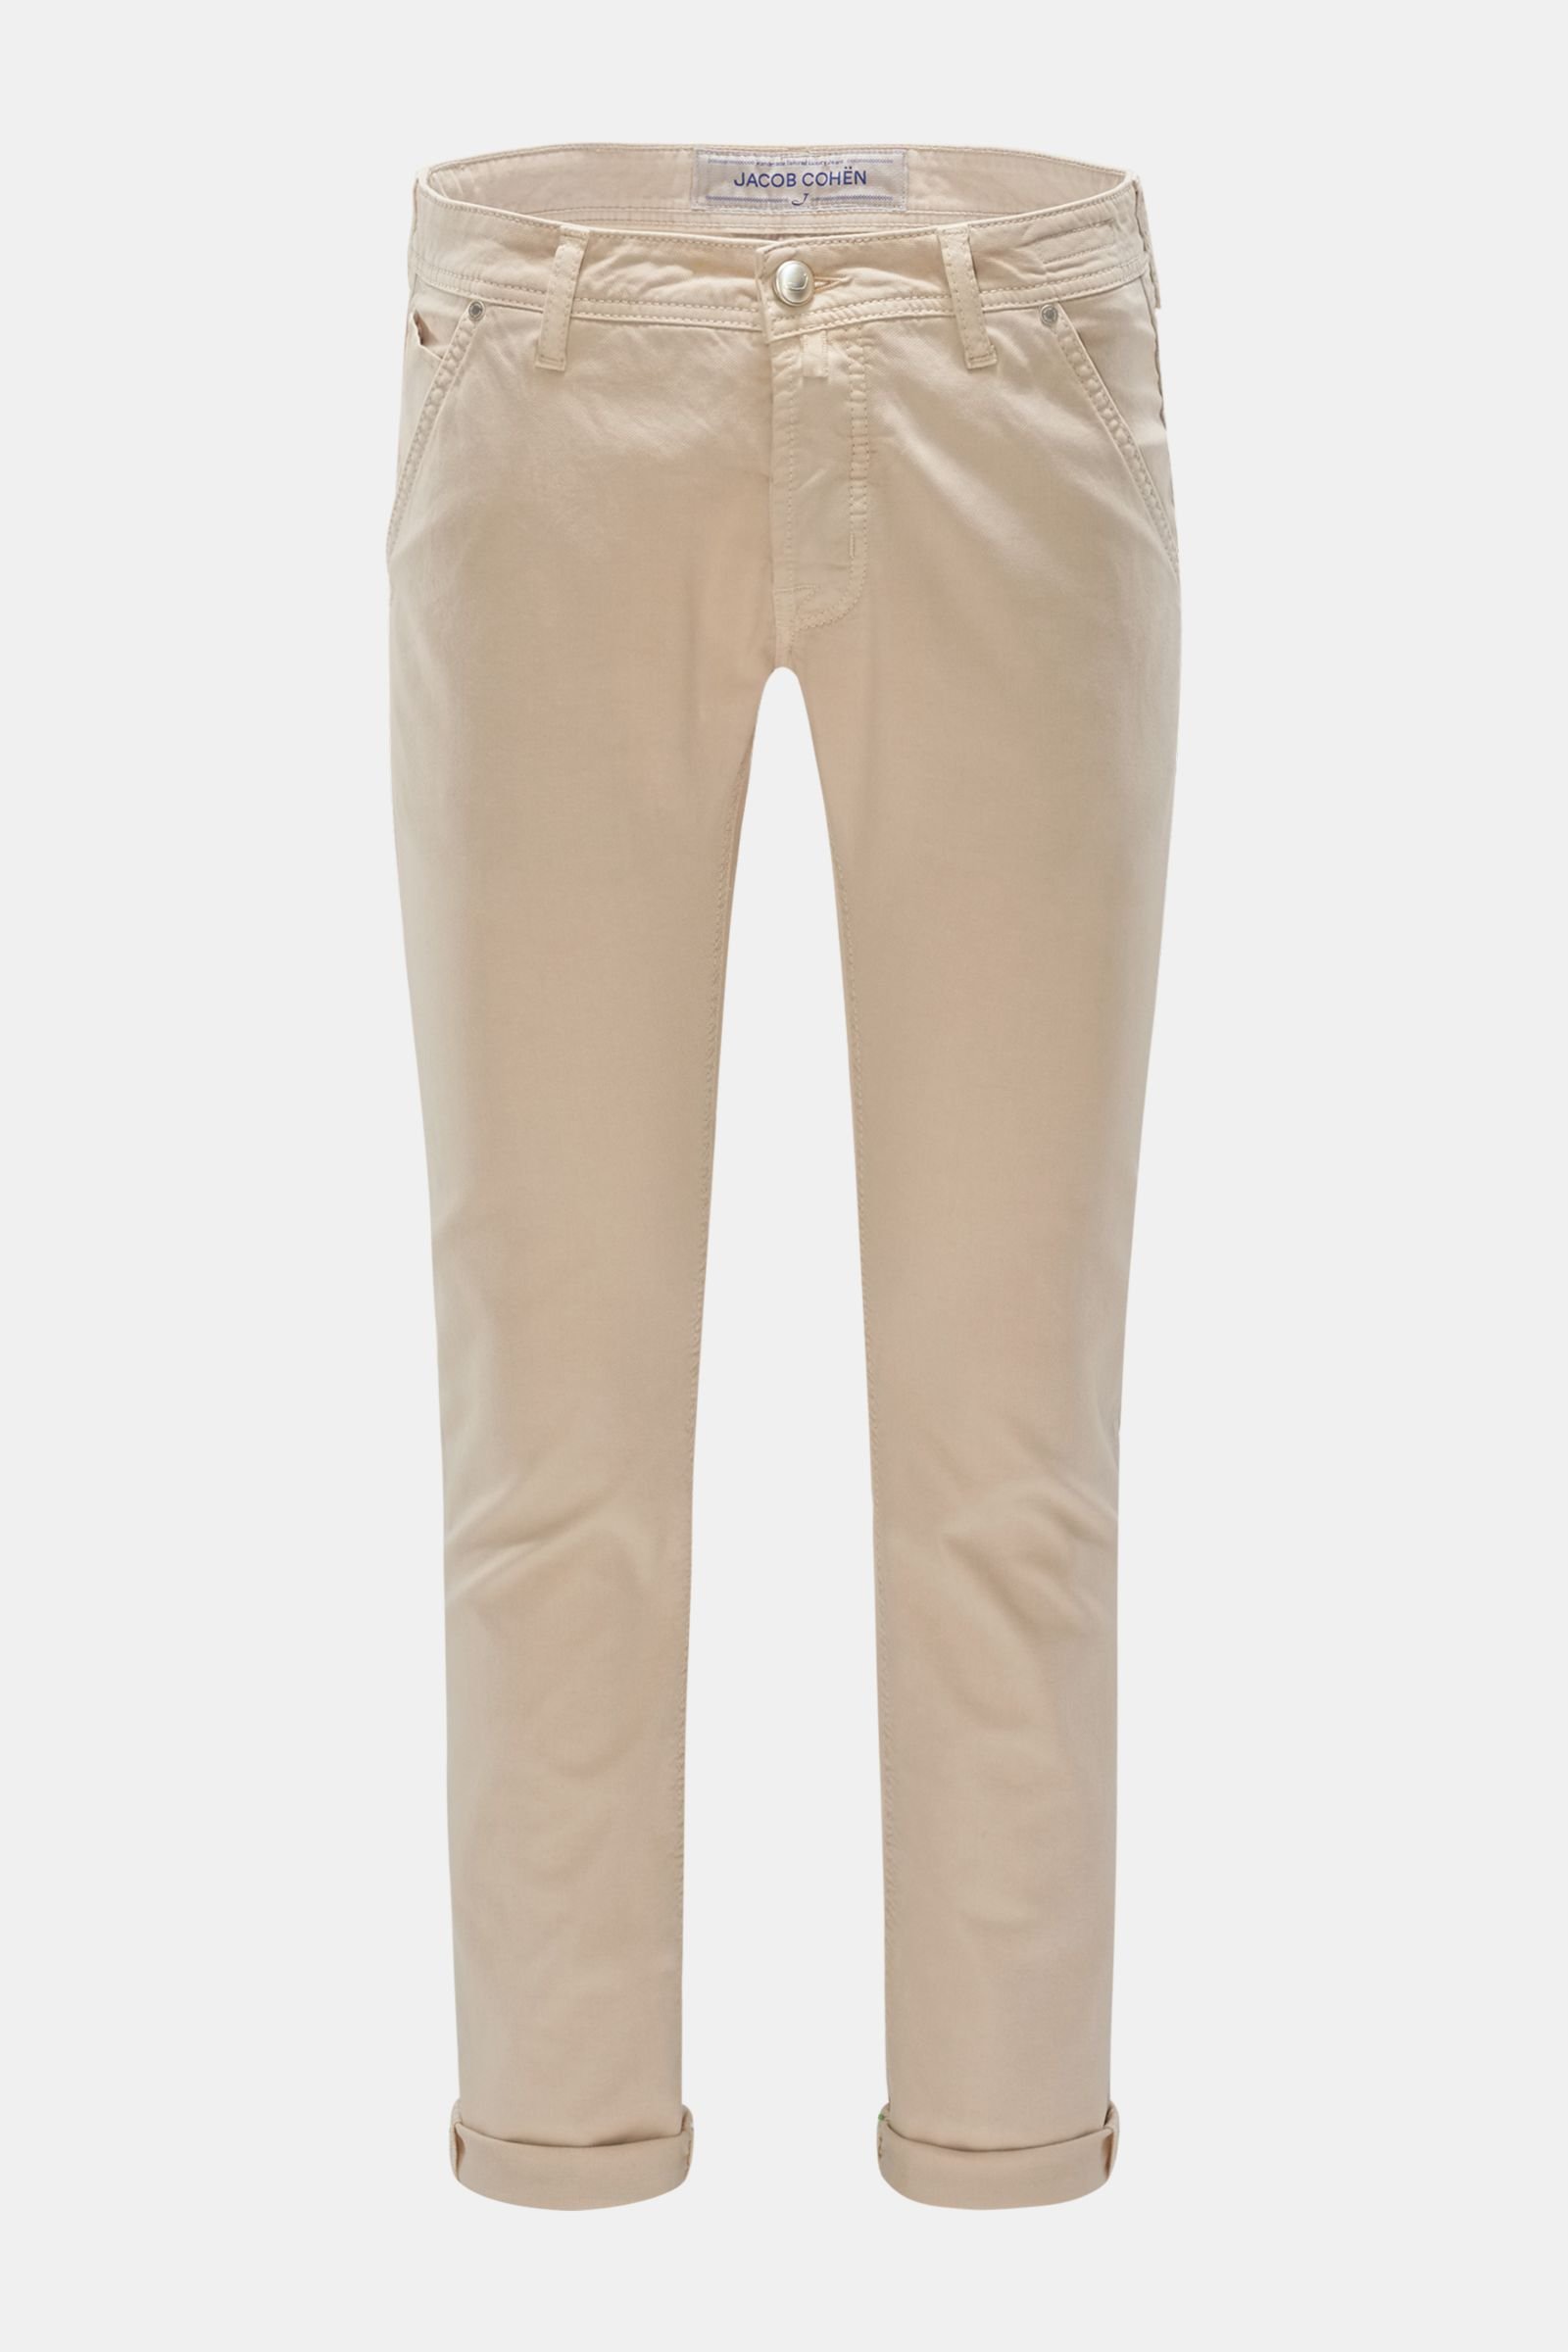 Cotton trousers 'J613 Comfort Slim Fit' cream